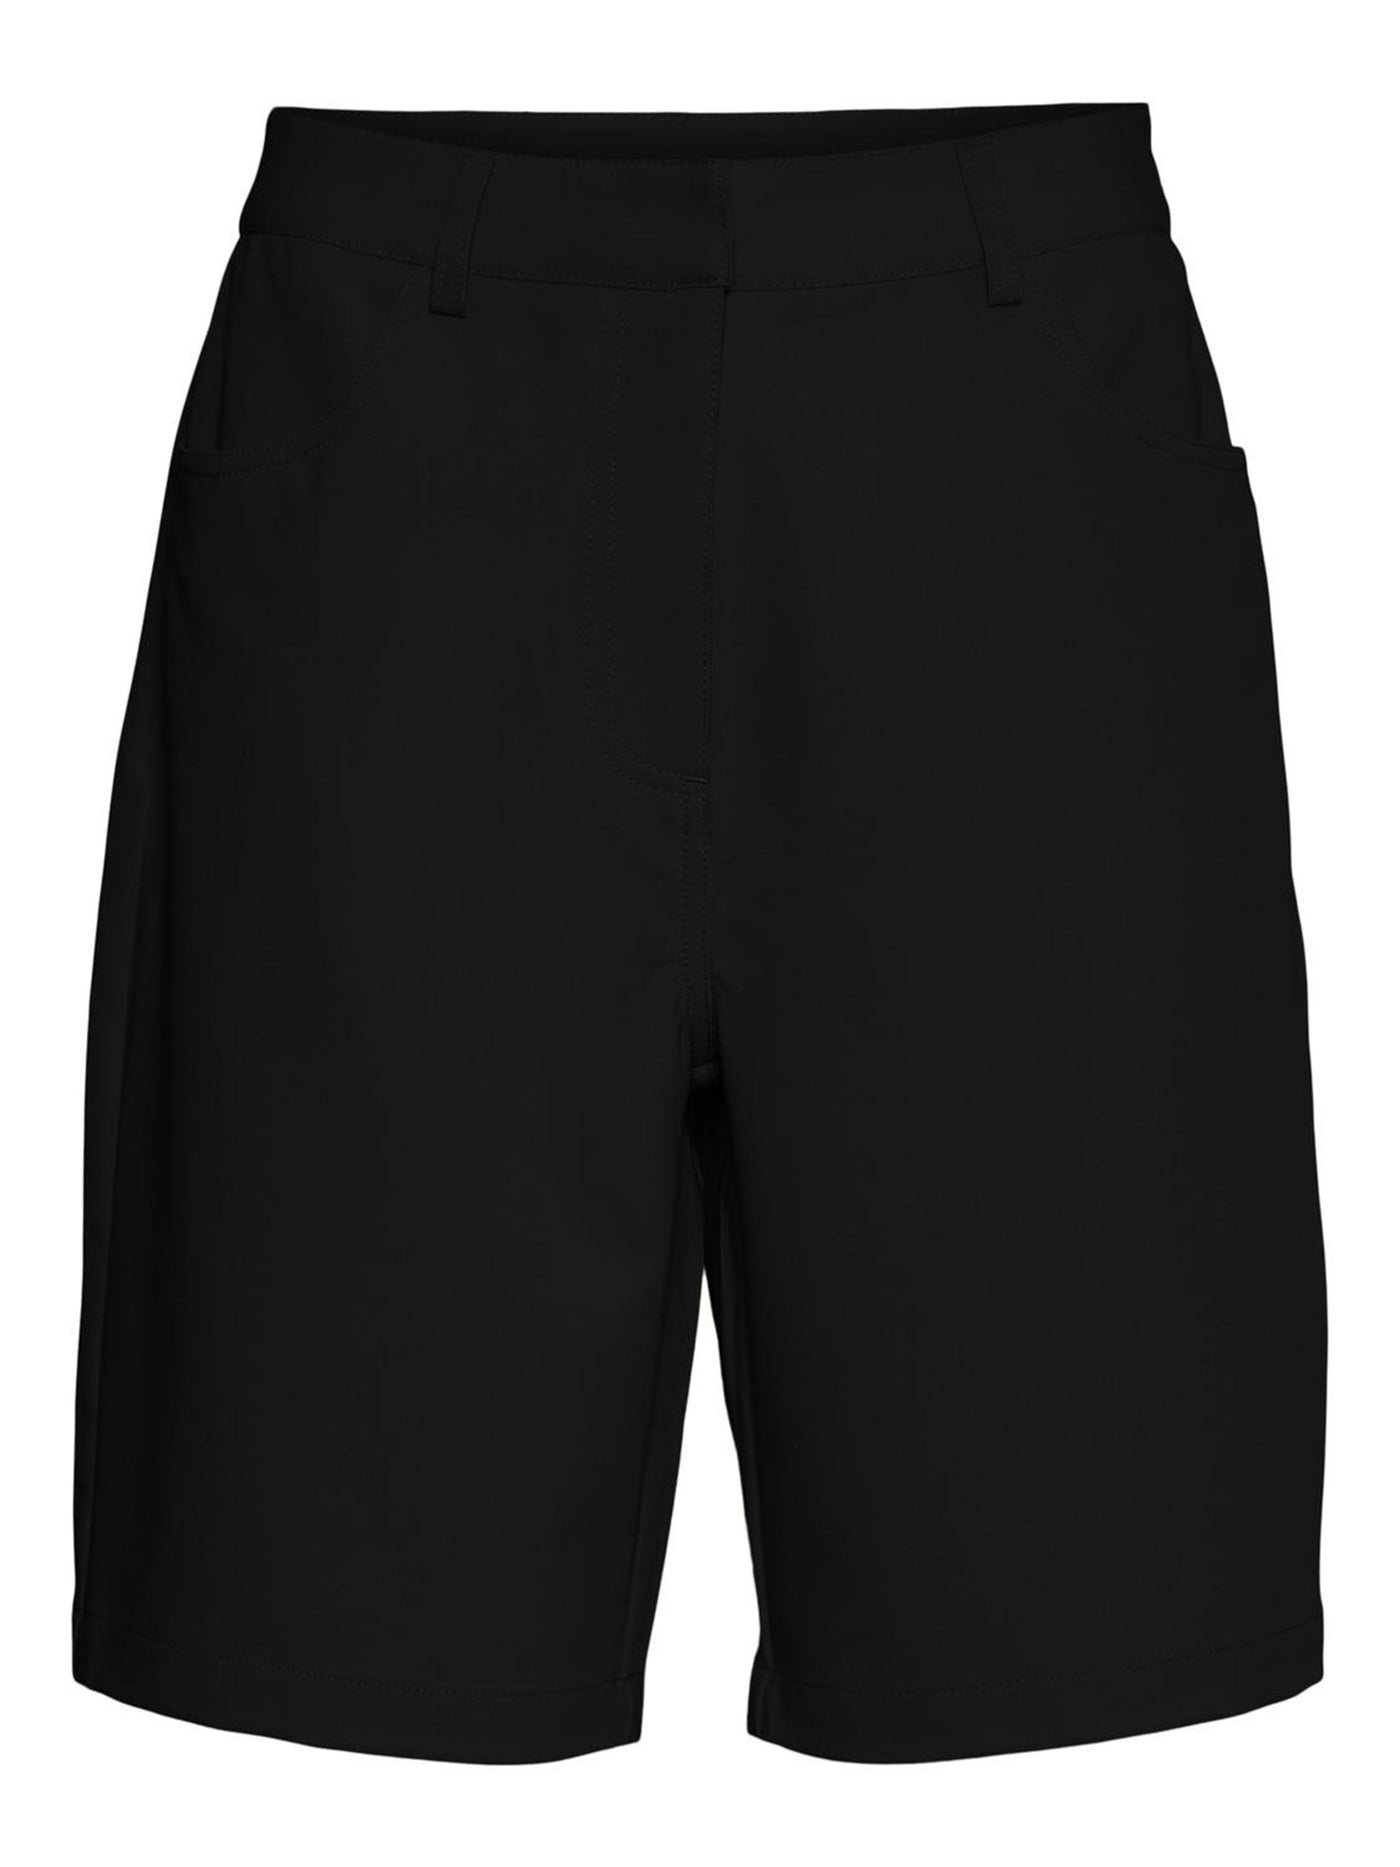 Drew High Waist Wide Shorts - Black - Noisy May - Black 2